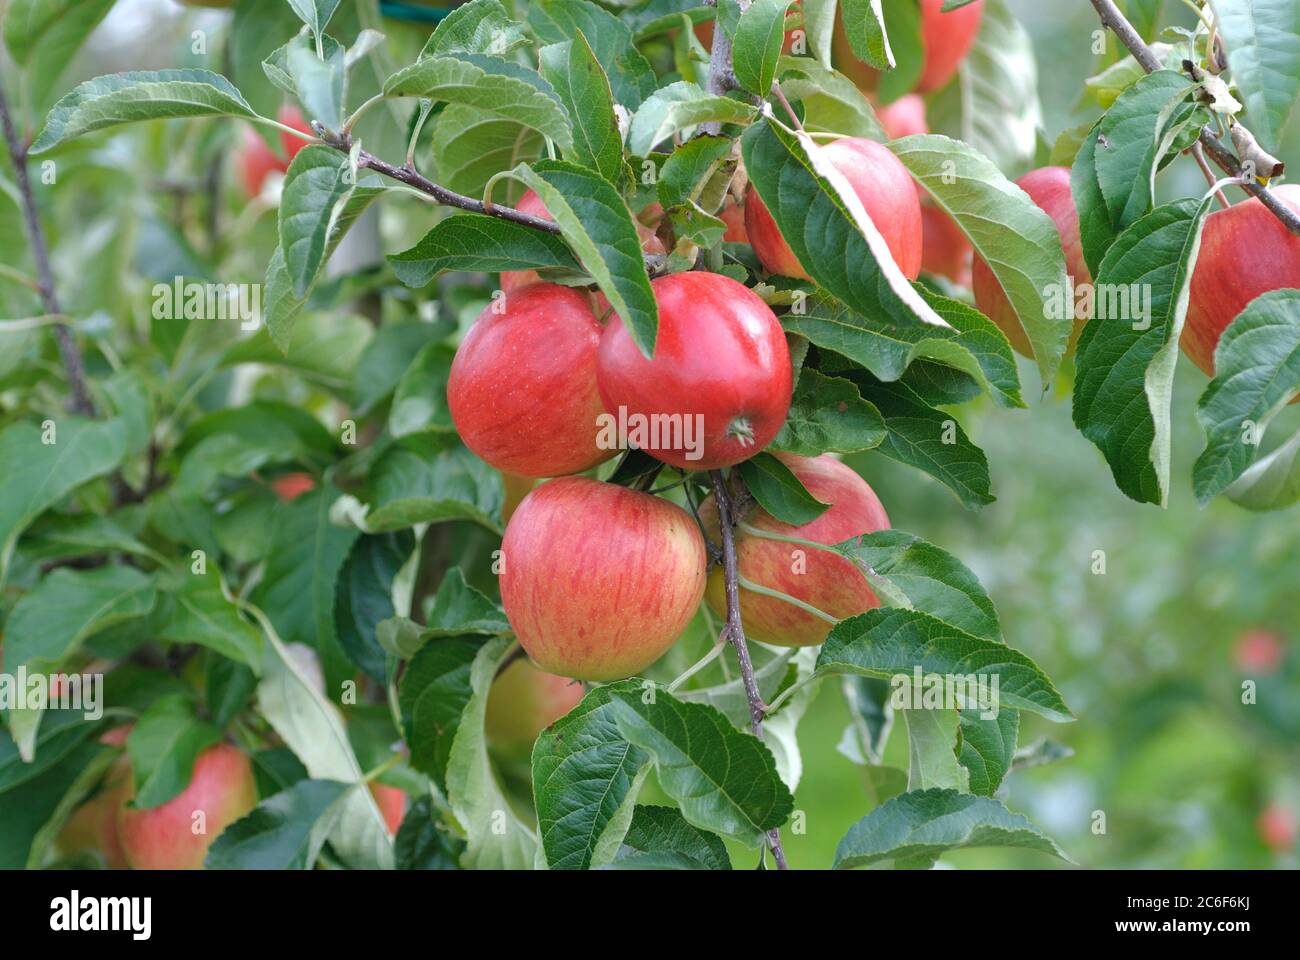 Malus domestica 'Honeycrisp' (Semi-Dwarf Apple)